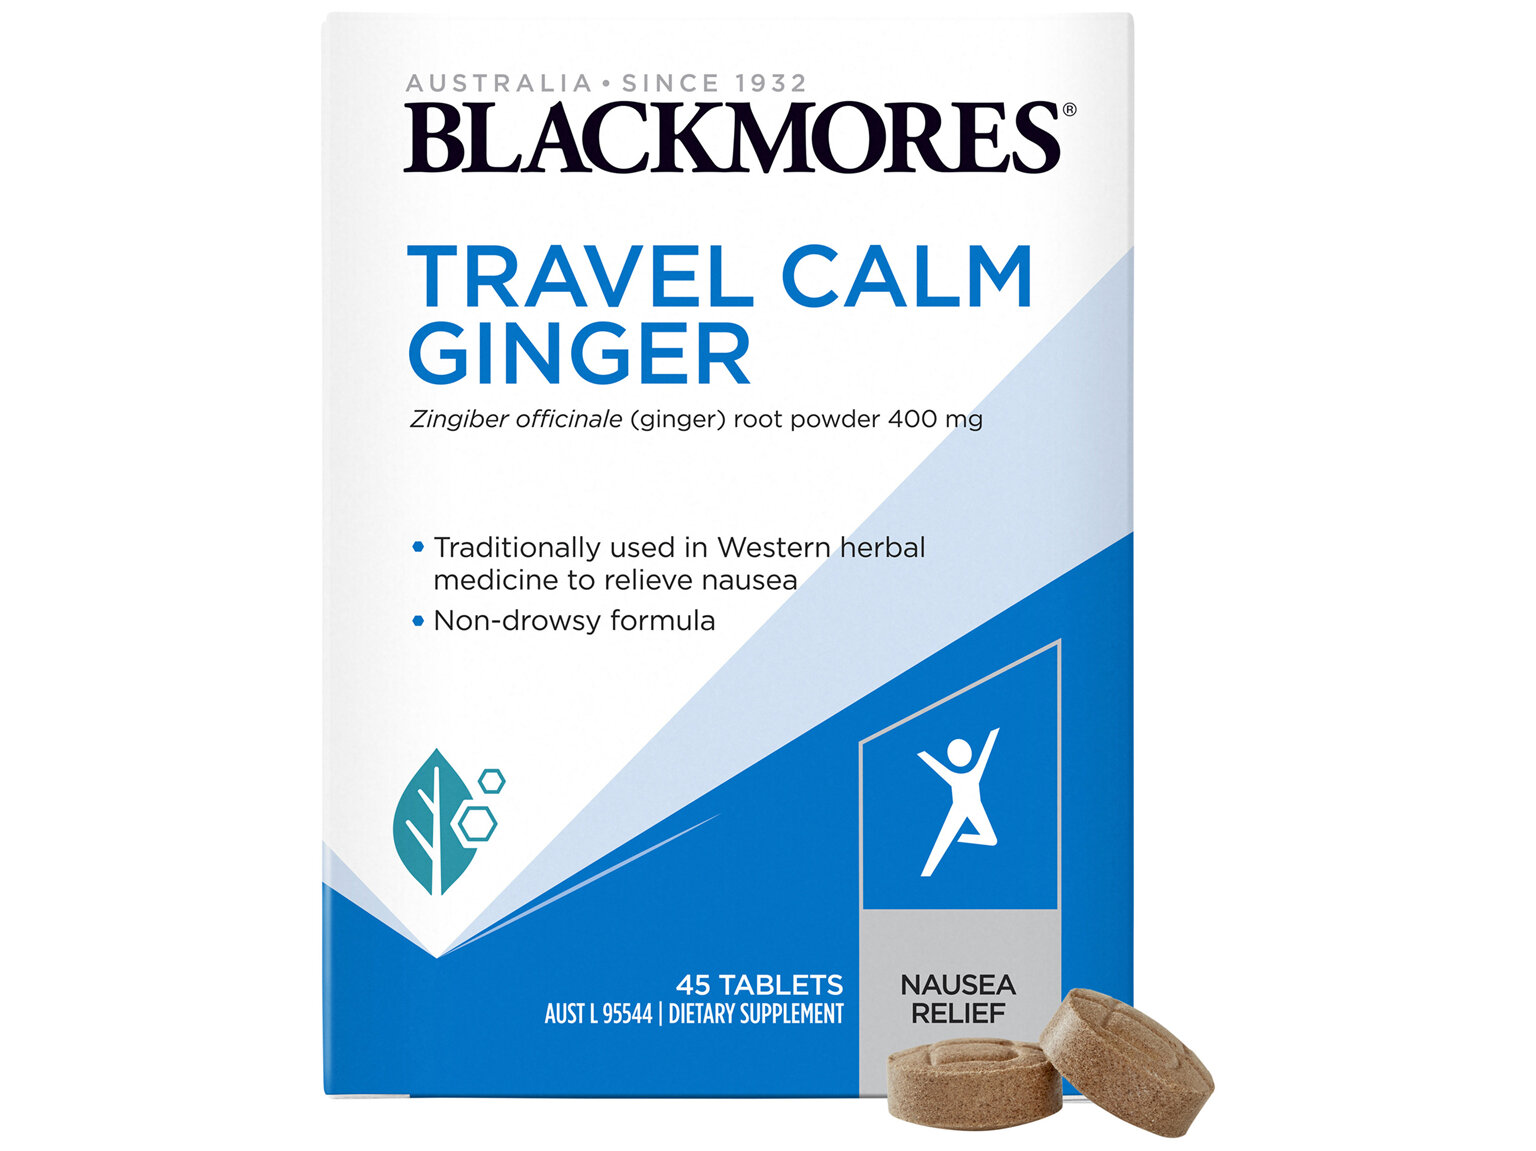 blackmores travel calm ginger nz